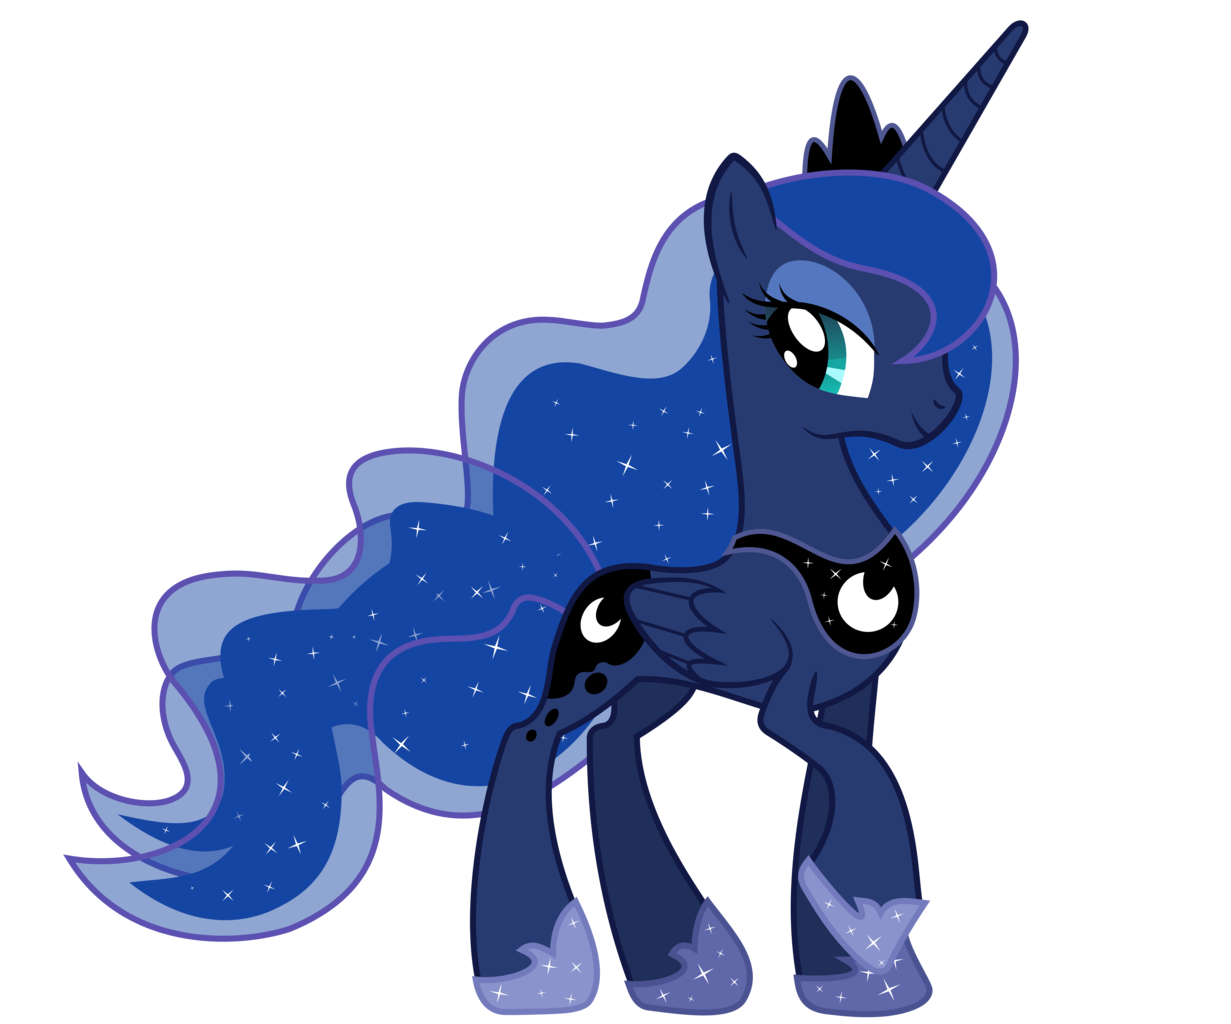 My little pony принцесса луна. Принцесса Луна пони. My little Pony Luna. Принцесса Луна май Лито пони. My little Pony Луна.